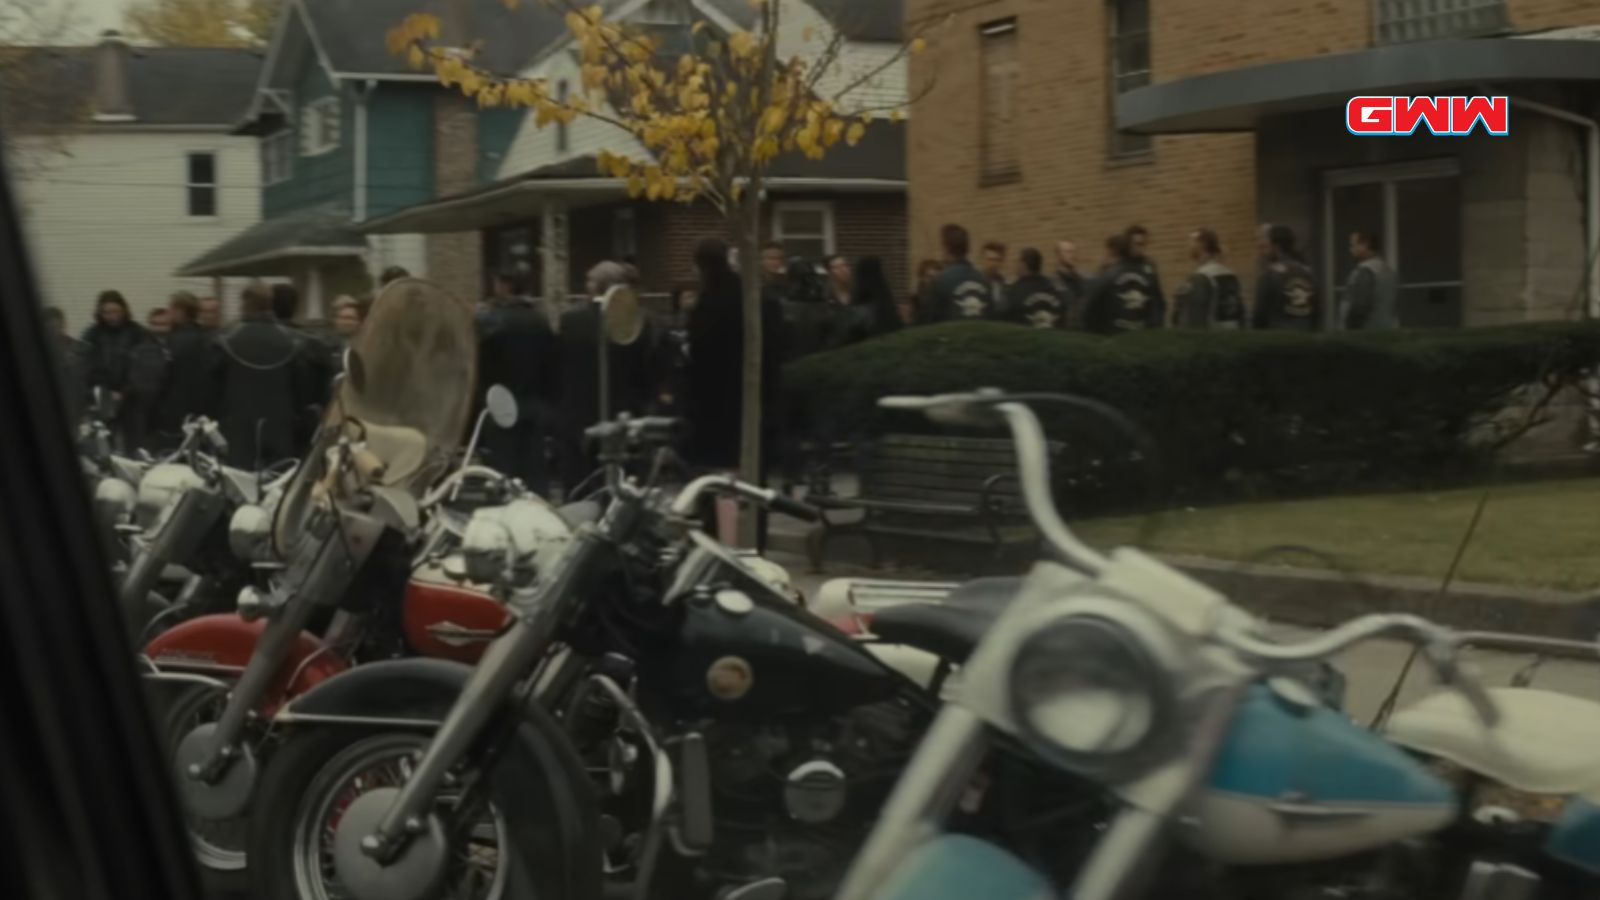 Grupo de motociclistas reunidos frente a una casa, varias bicicletas estacionadas.